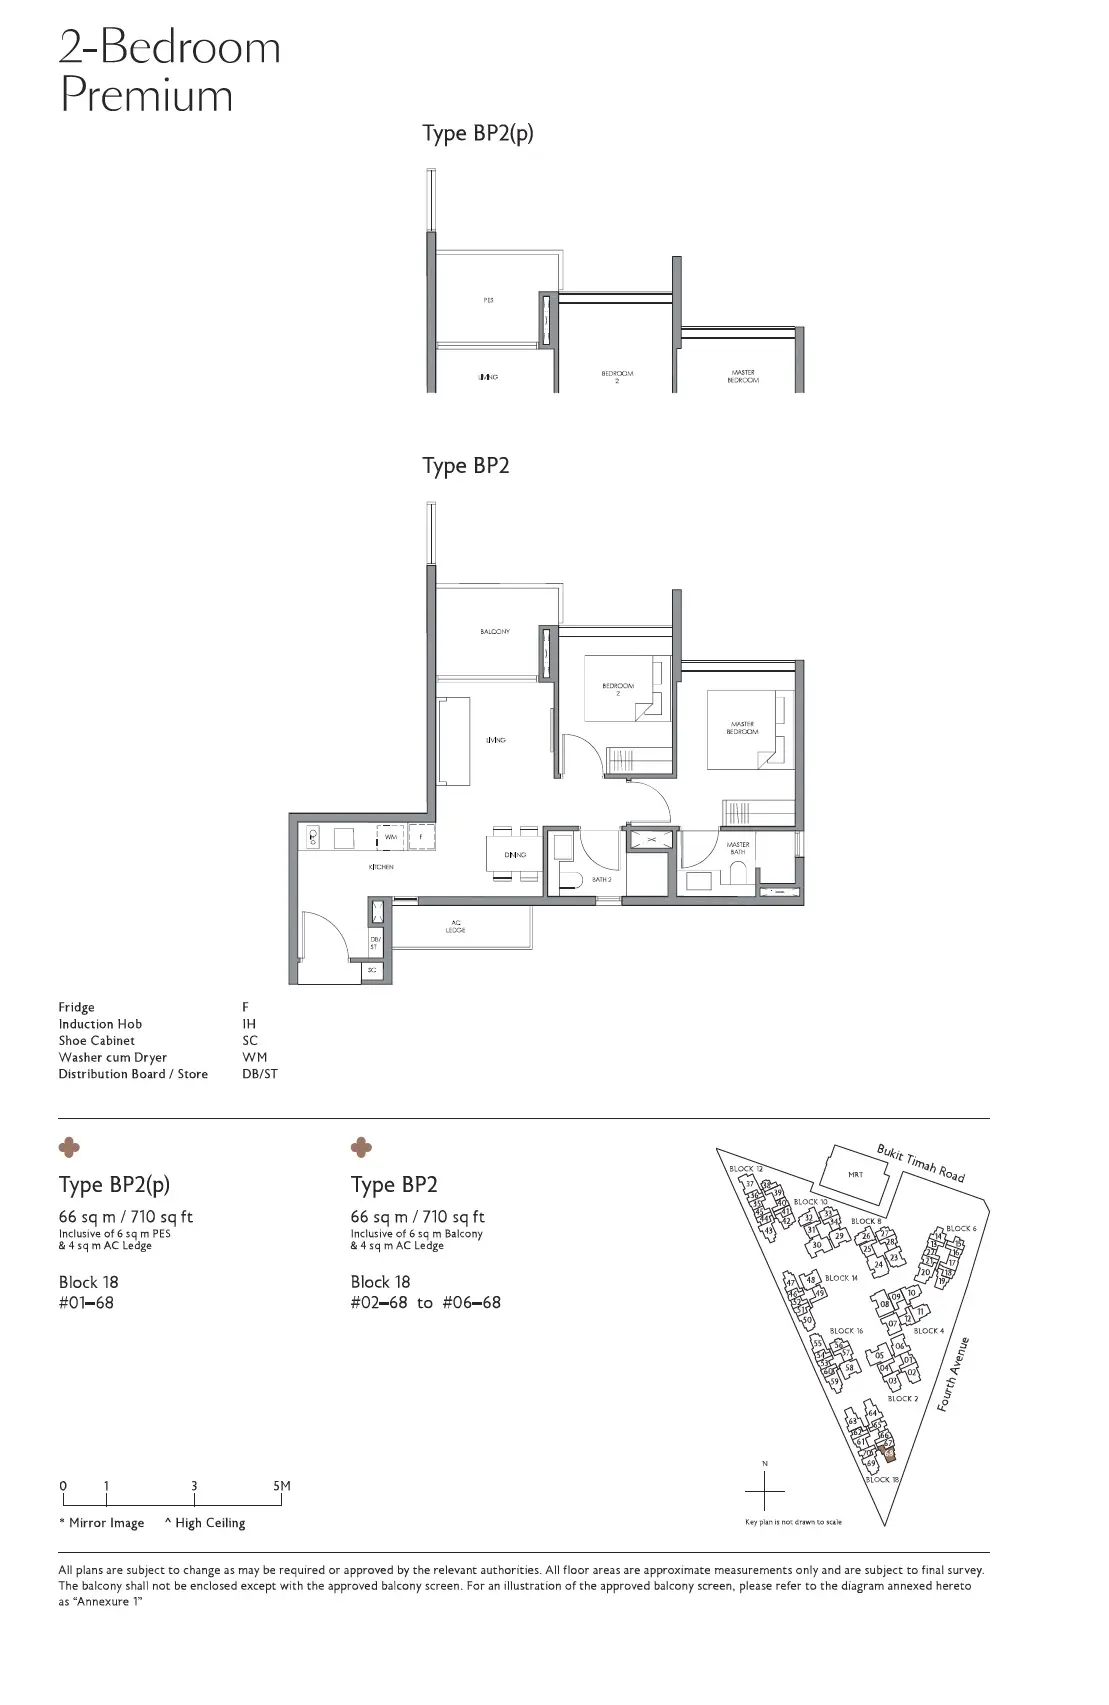 Fourth Avenue Residences - Floor Plan - 2 Bedroom Premium BP2